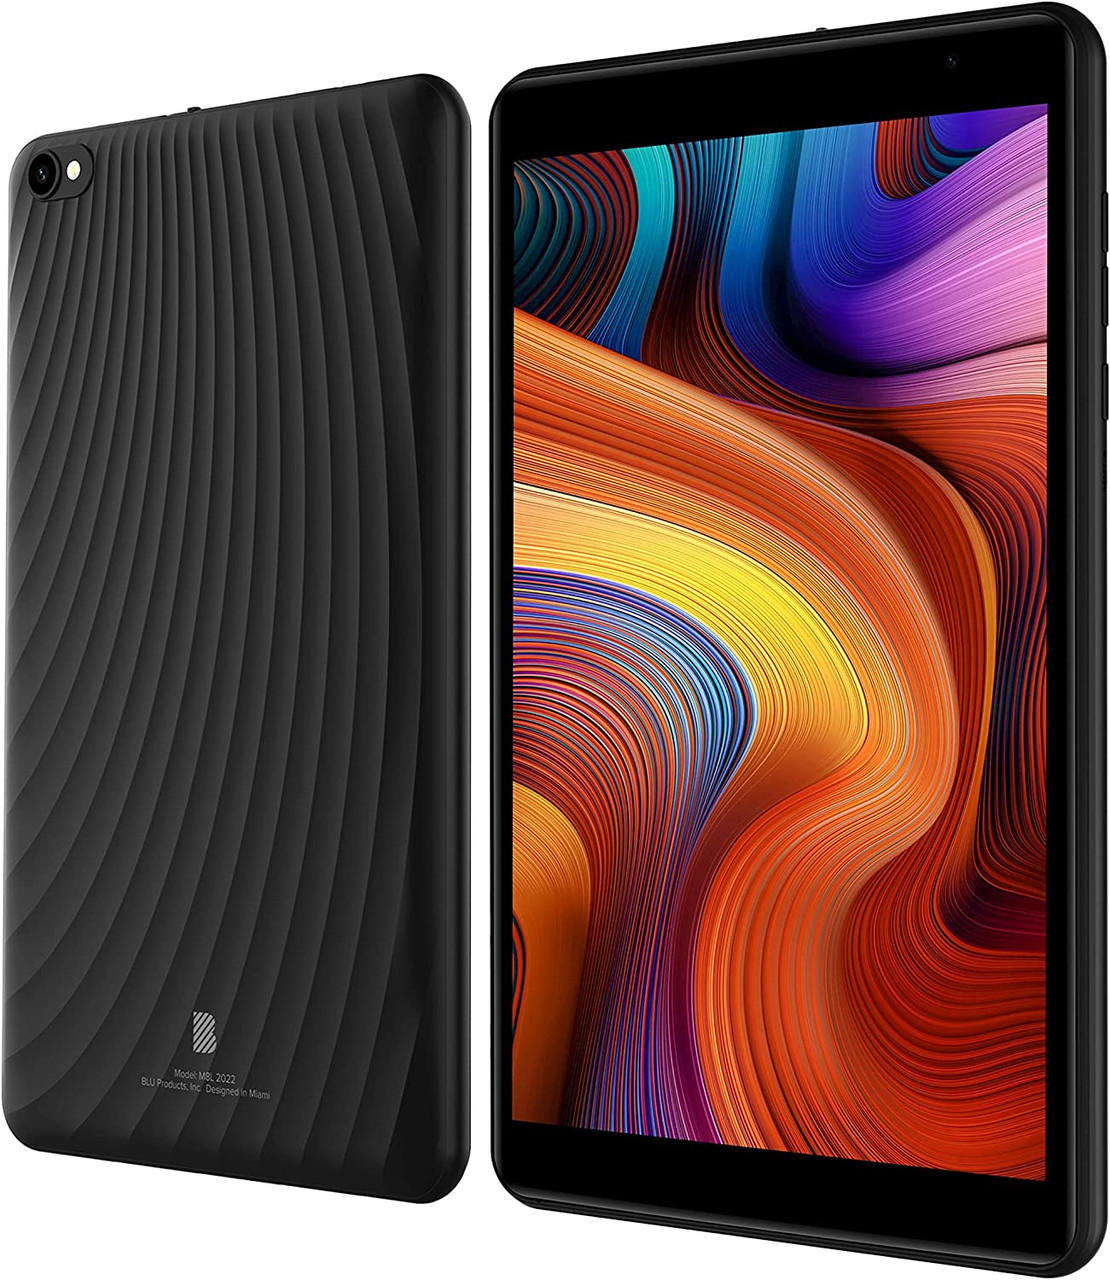 BLU M8L Tablet Smartphone Black Wi-Fi LTE Cellular